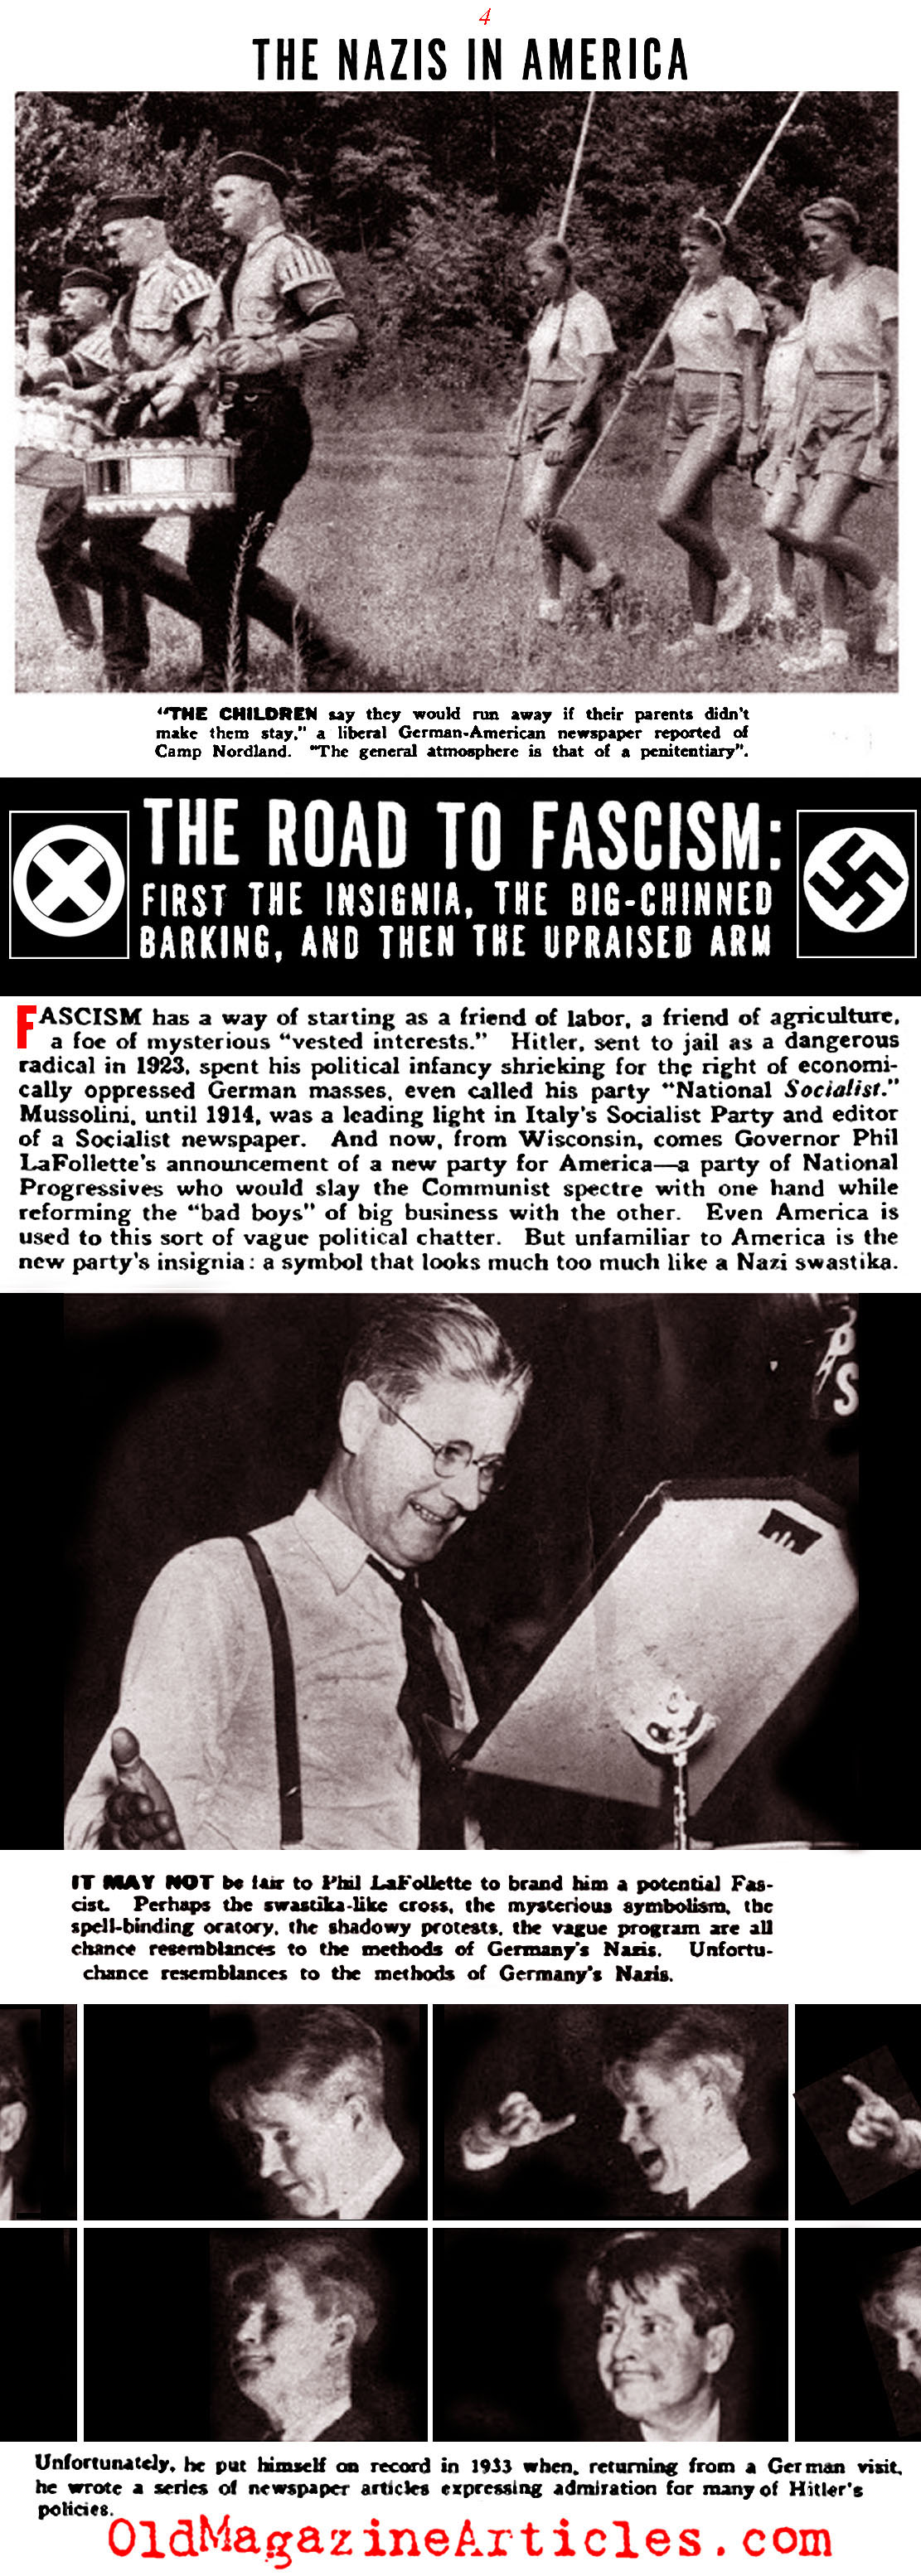 American Nazis (Click Magazine, 1938)